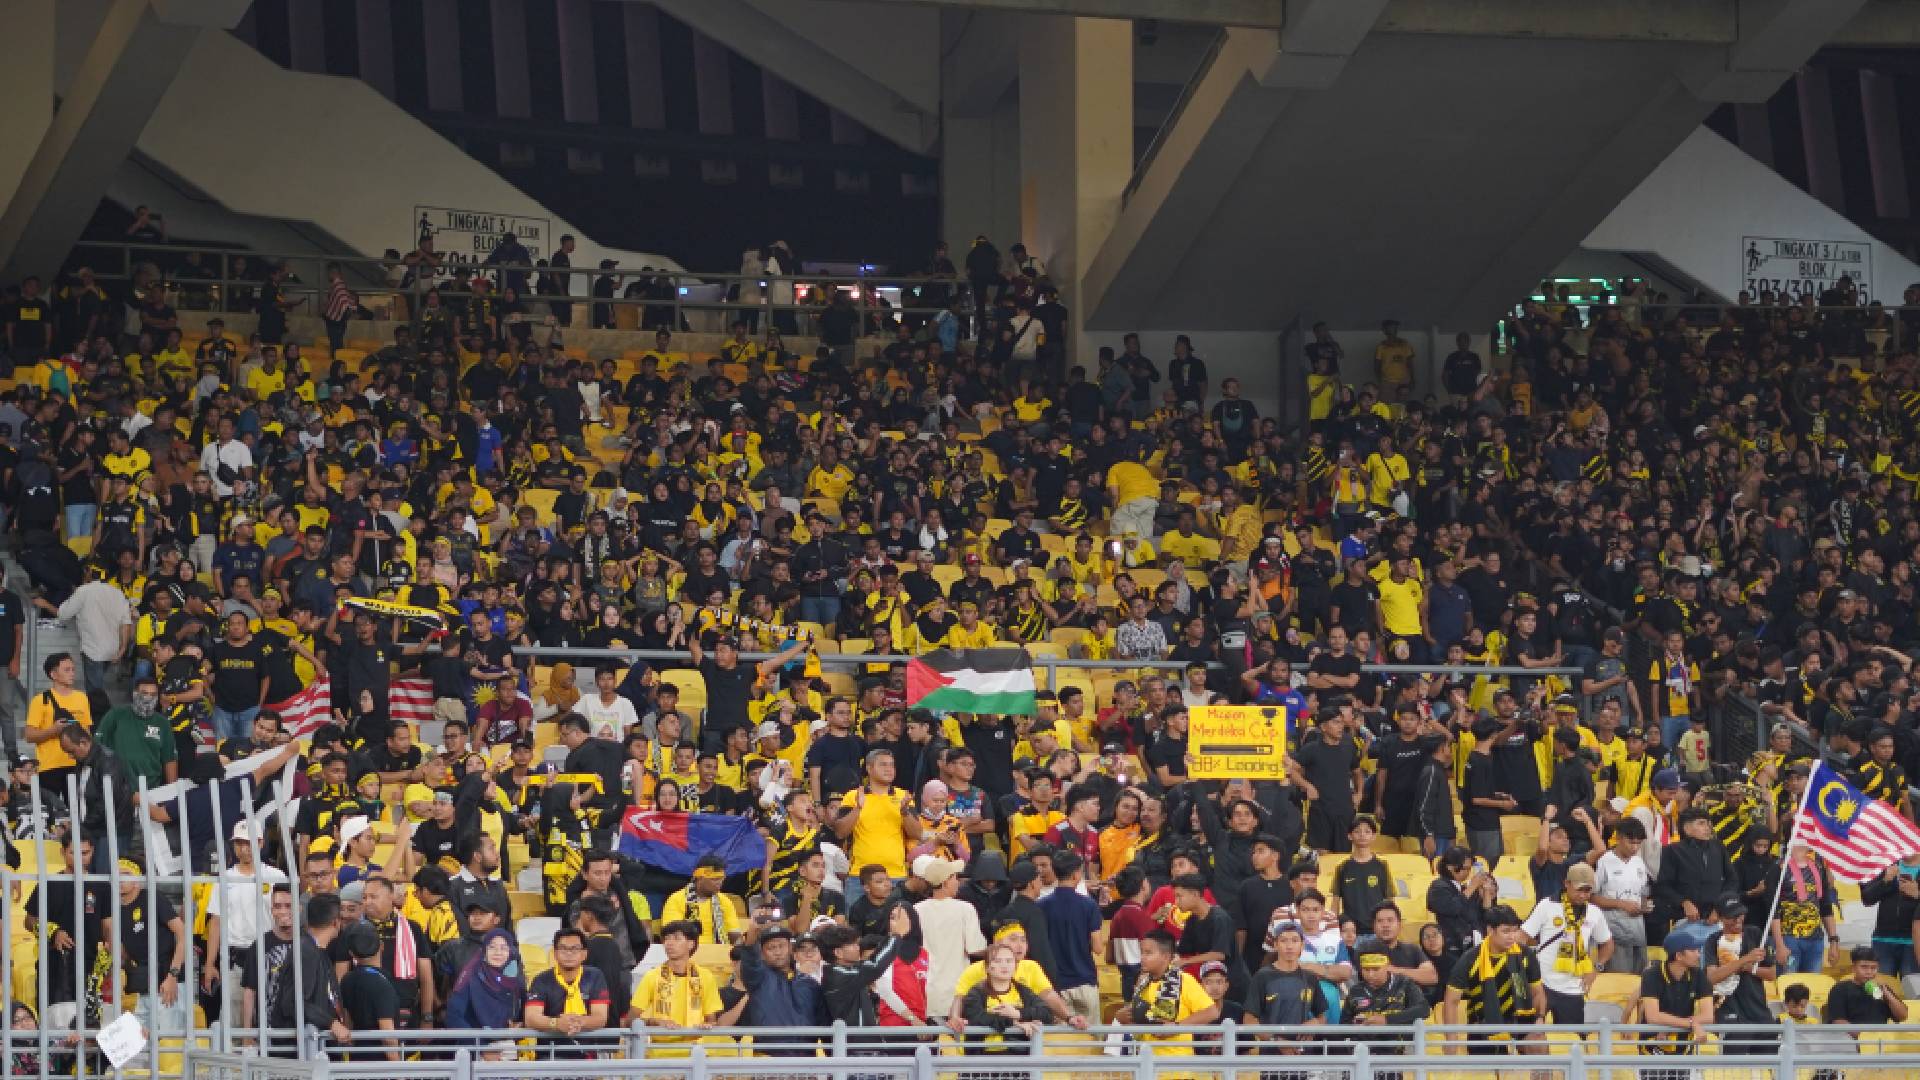 Pestabola Merdeka: Bendera Negara Lain Dilarang Masuk Ke Stadium